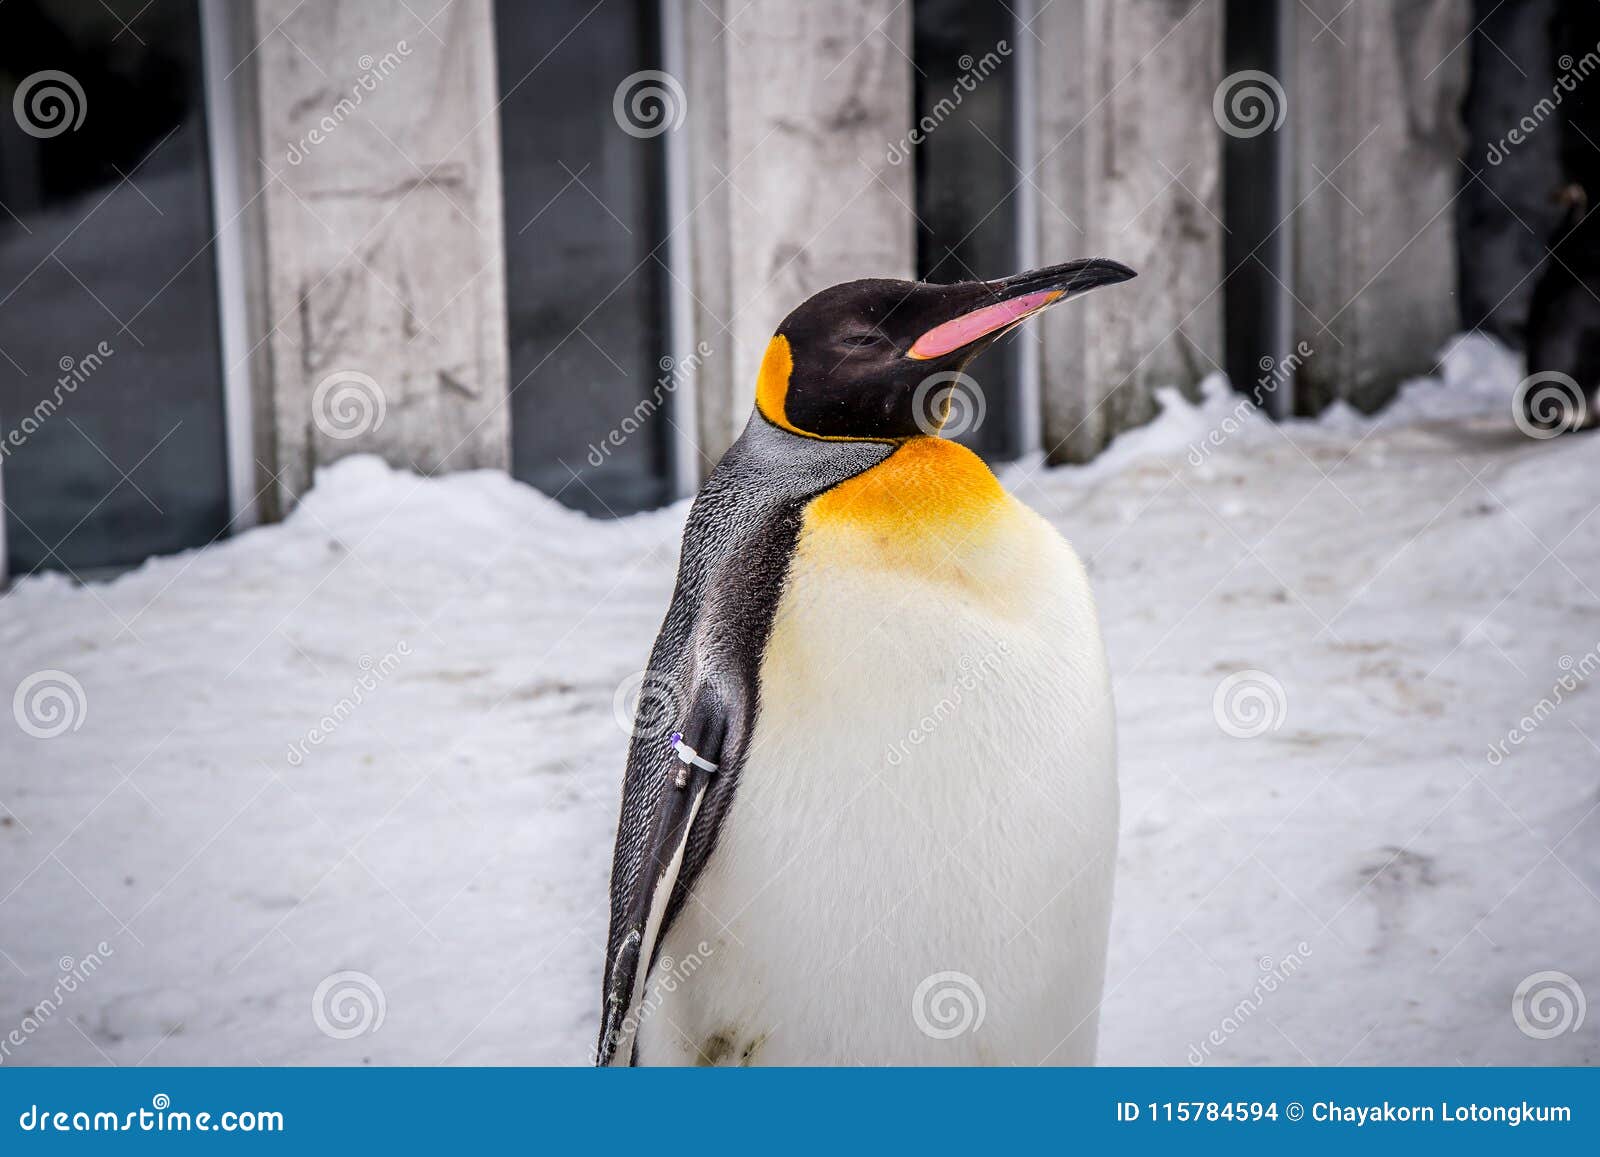 Emperor Penguin King Of Penguins Species Stock Photo - Image of